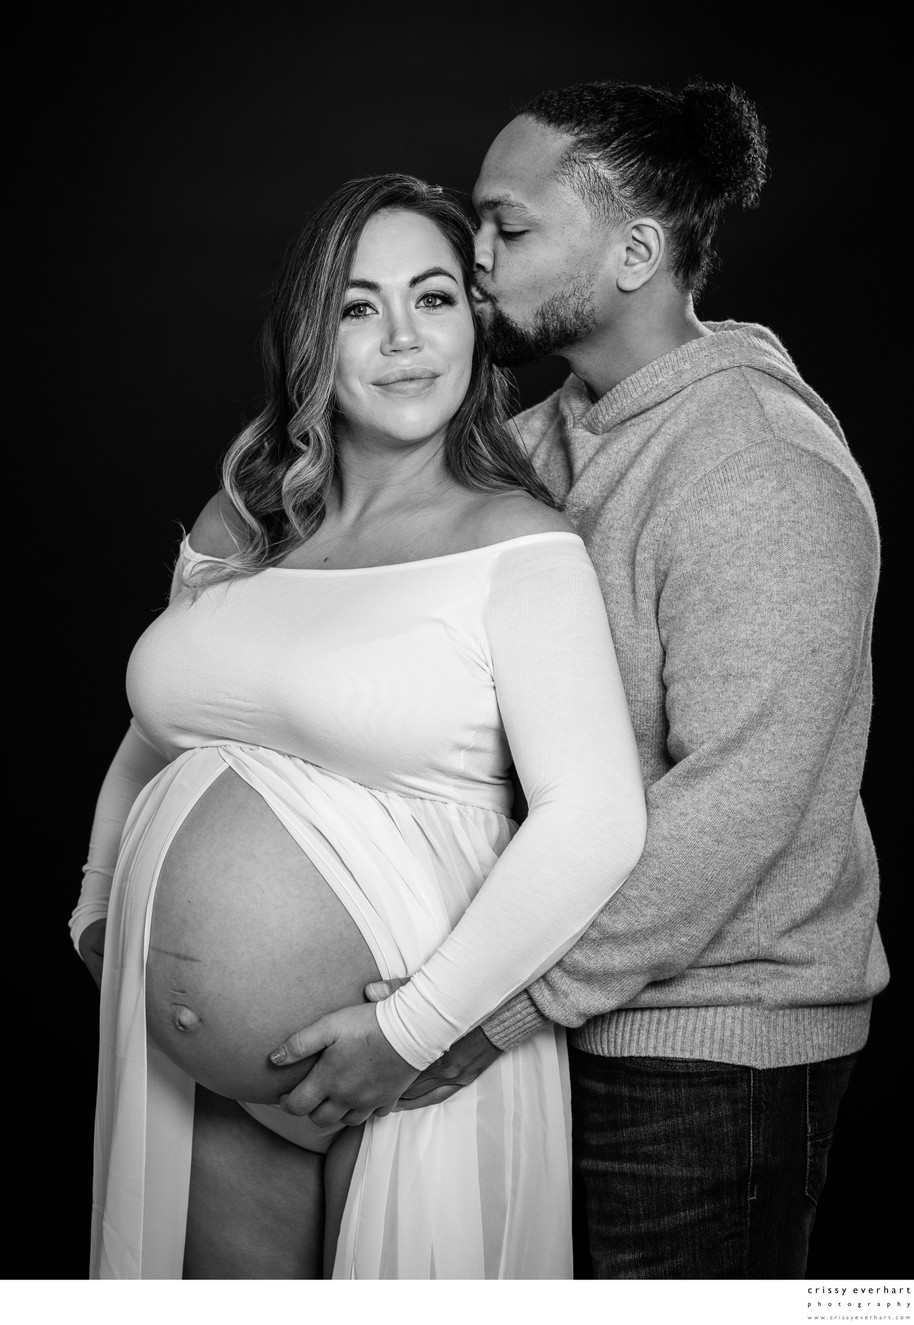 Pregnancy Photos with Spouse